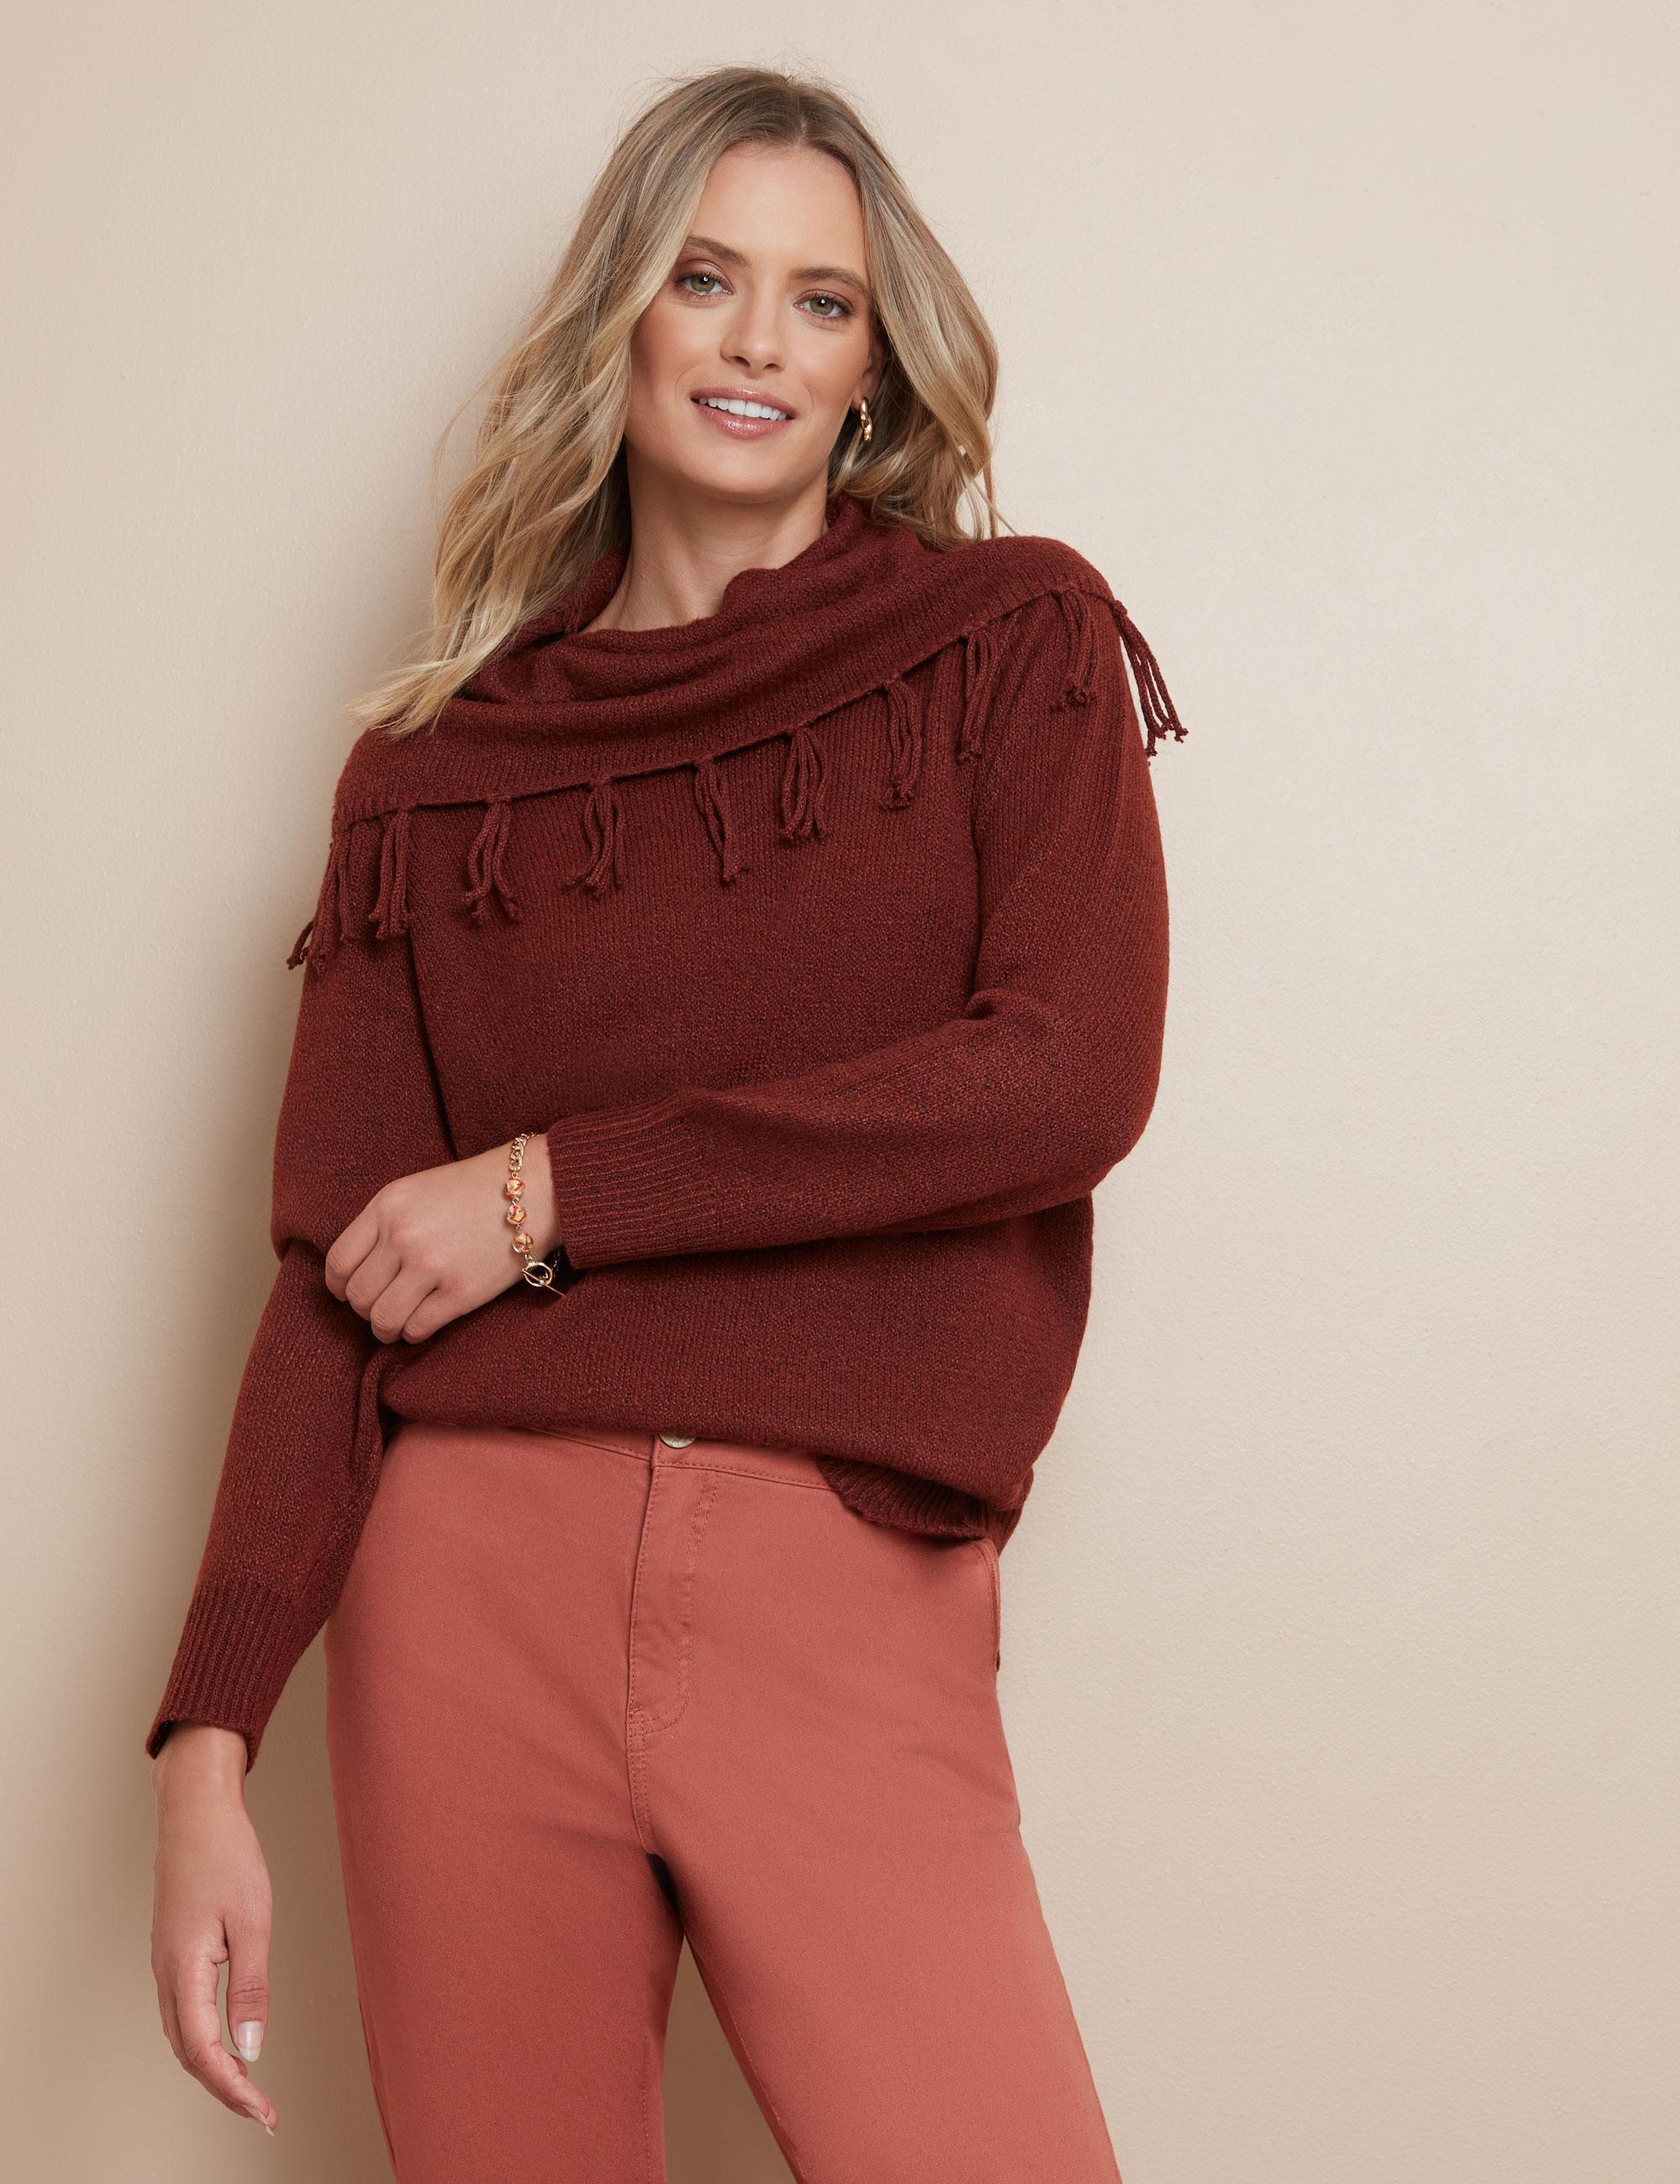 W LANE - Womens Jumper - Short Winter Sweater - Brown Pullover - Tassle - Casual - Knitwear - Long Sleeve - Cowl Neck - Office Clothing - Work Wear